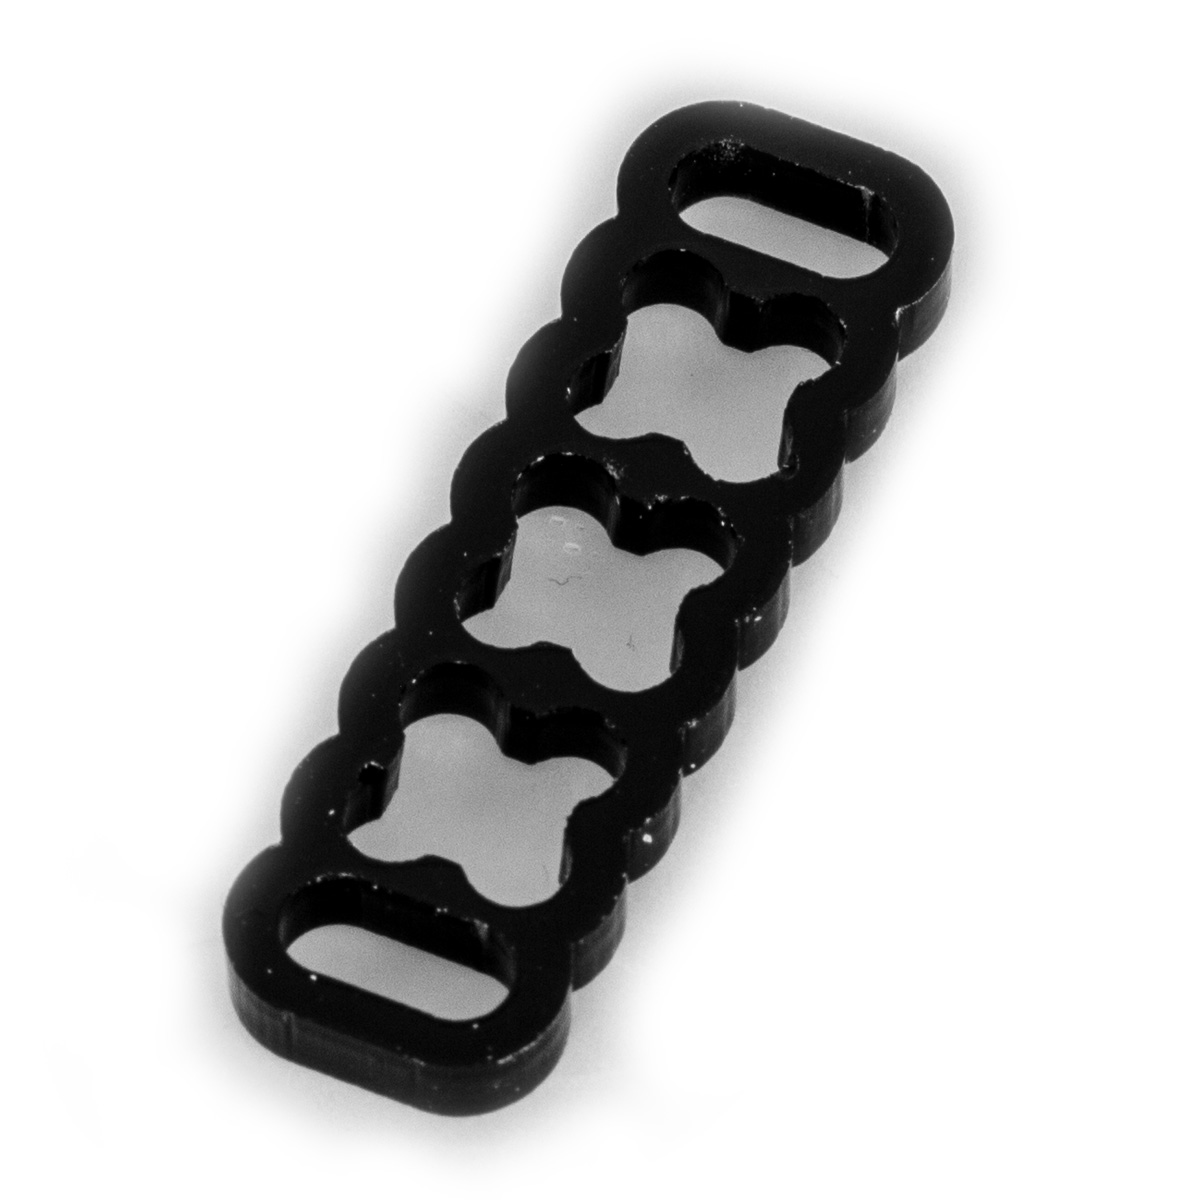 TechForge 16 Slot Stealth Cable Comb V2 - Black